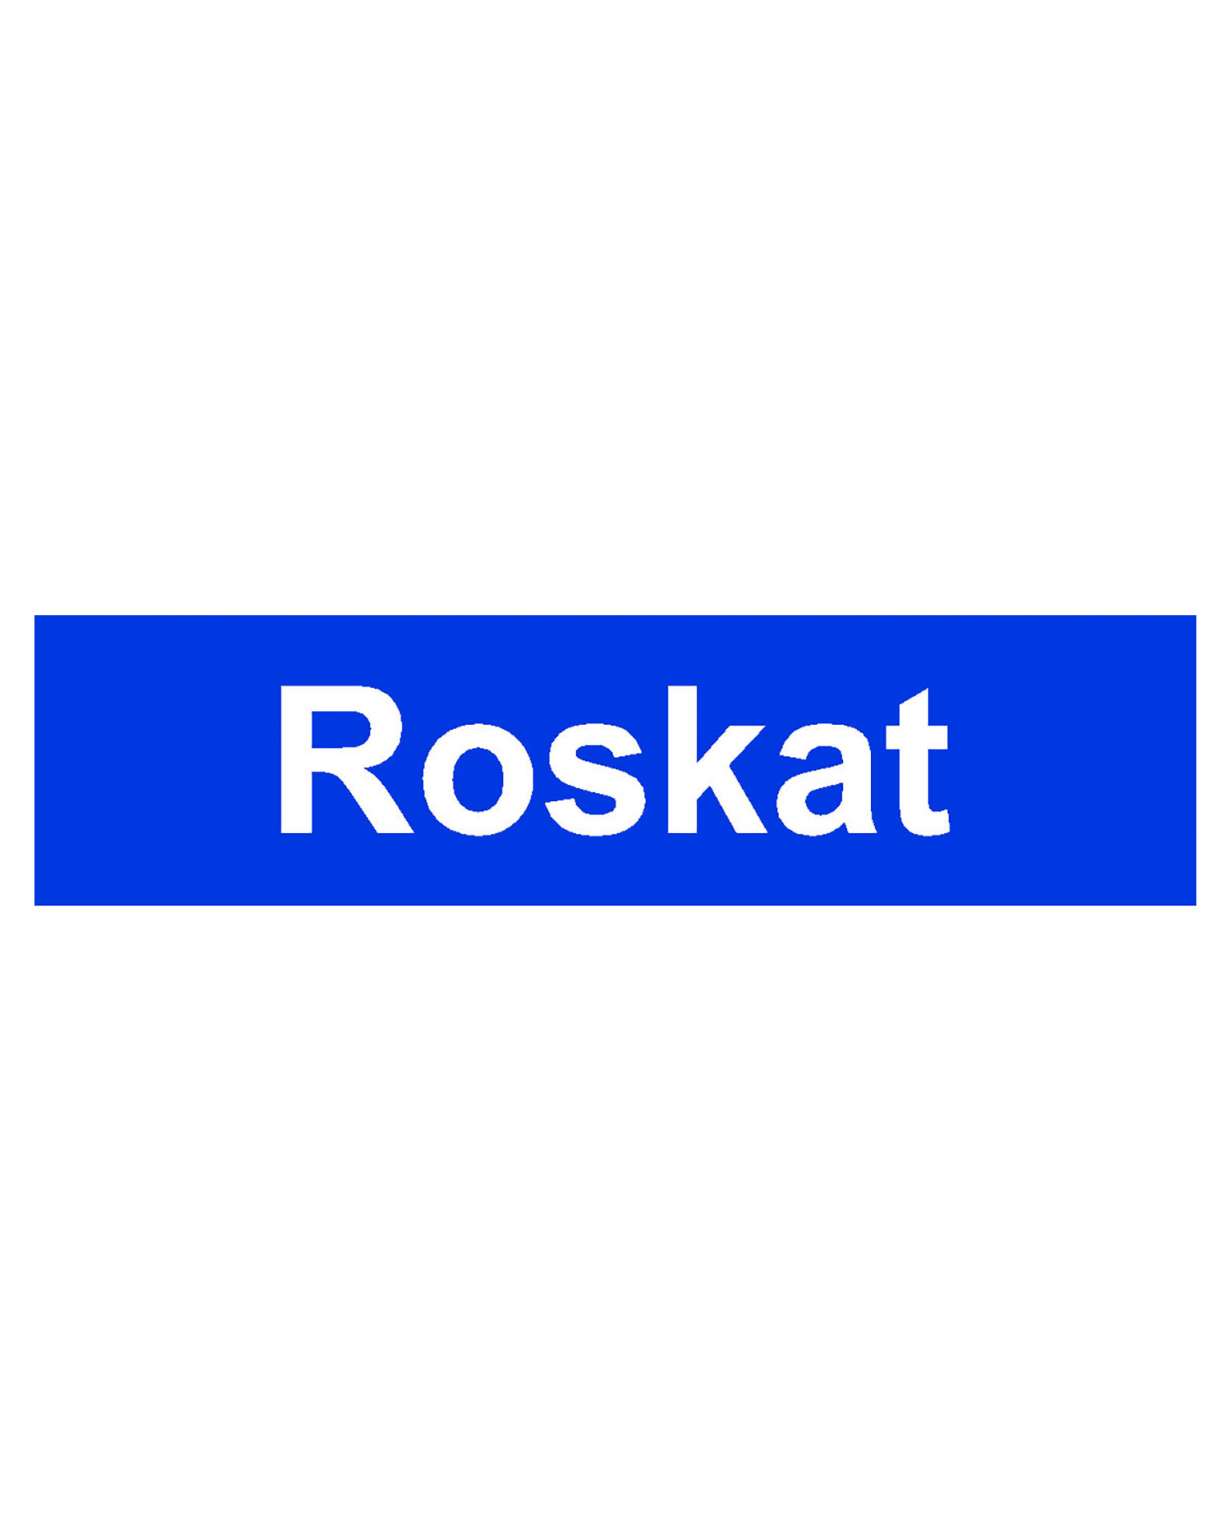 Roskat, Tarra, 400x100 mm